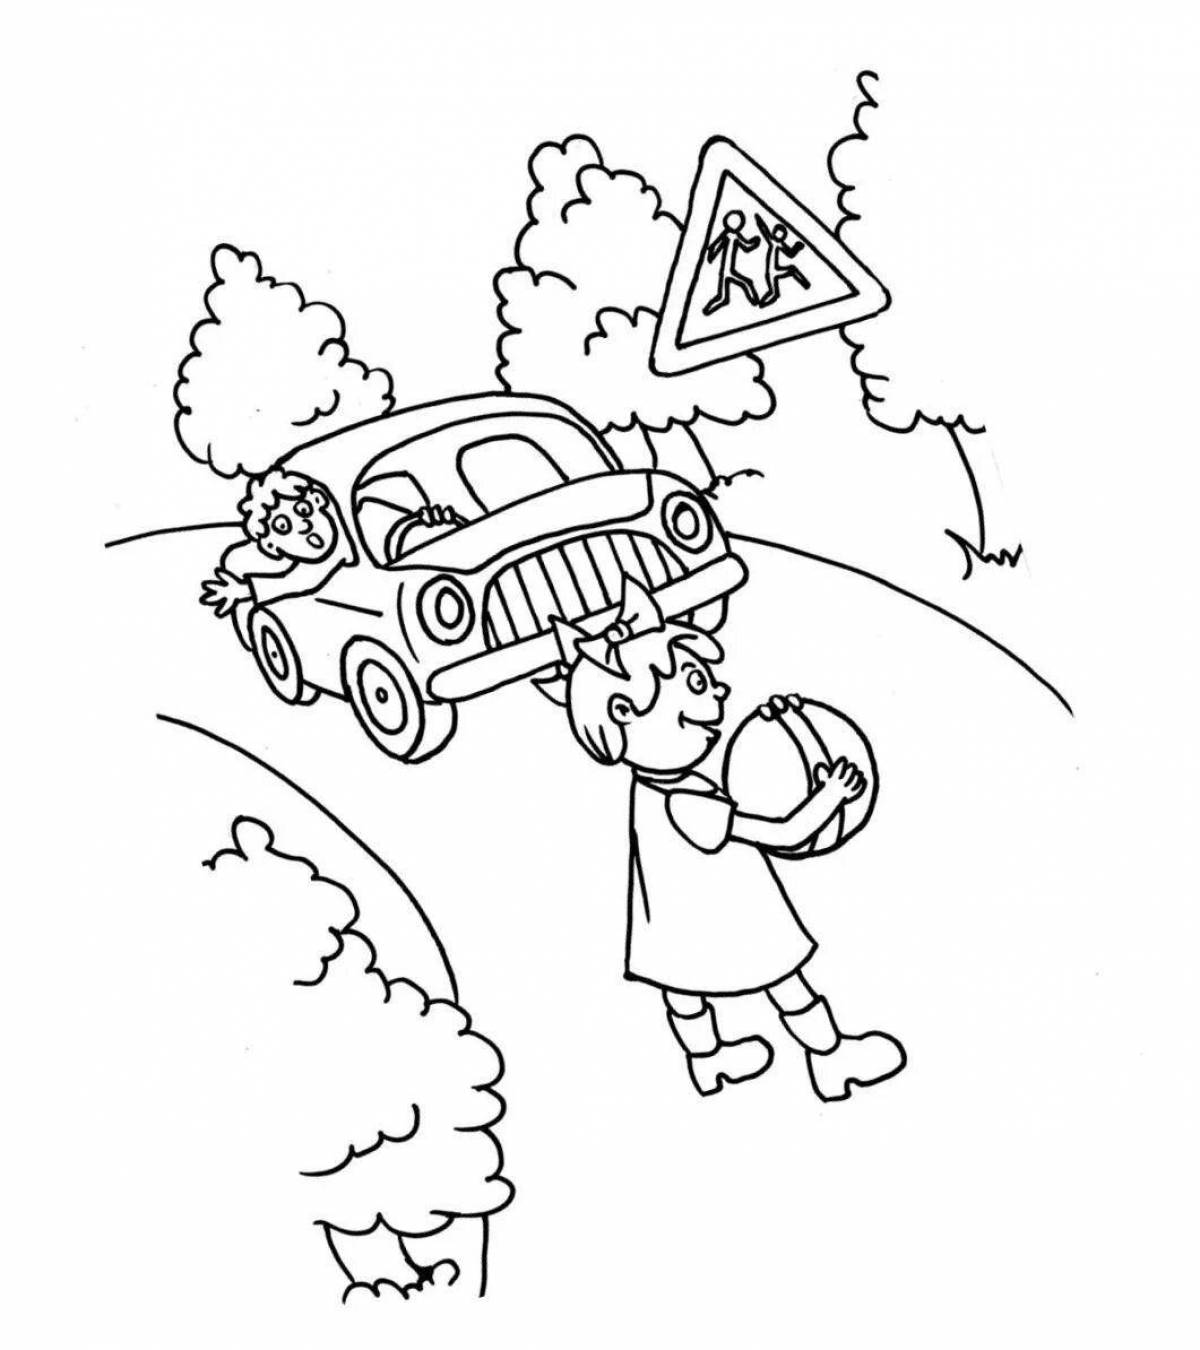 Fun car coloring page